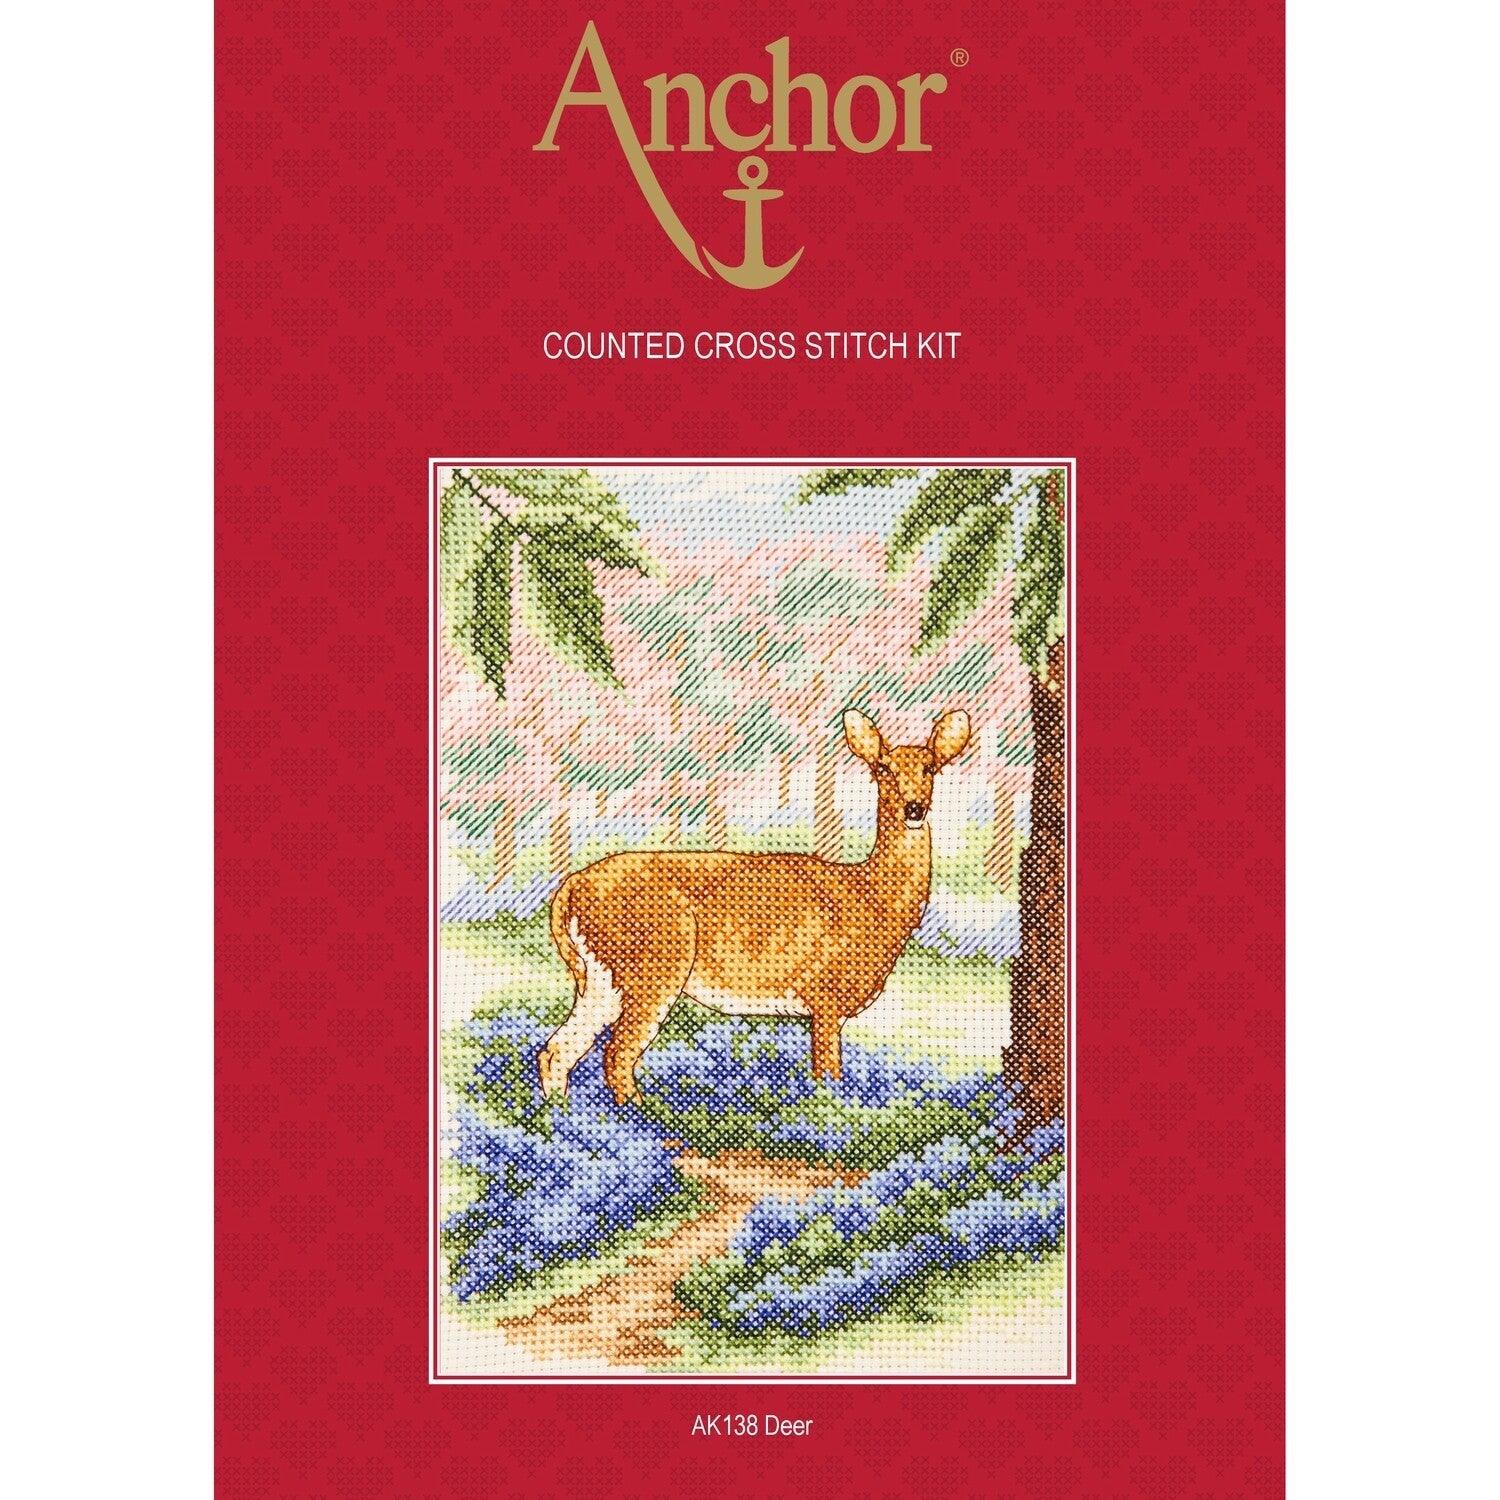 Anchor Essentials Cross Stitch Kit - AK138, Deer - Luca-S Cross Stitch Kits